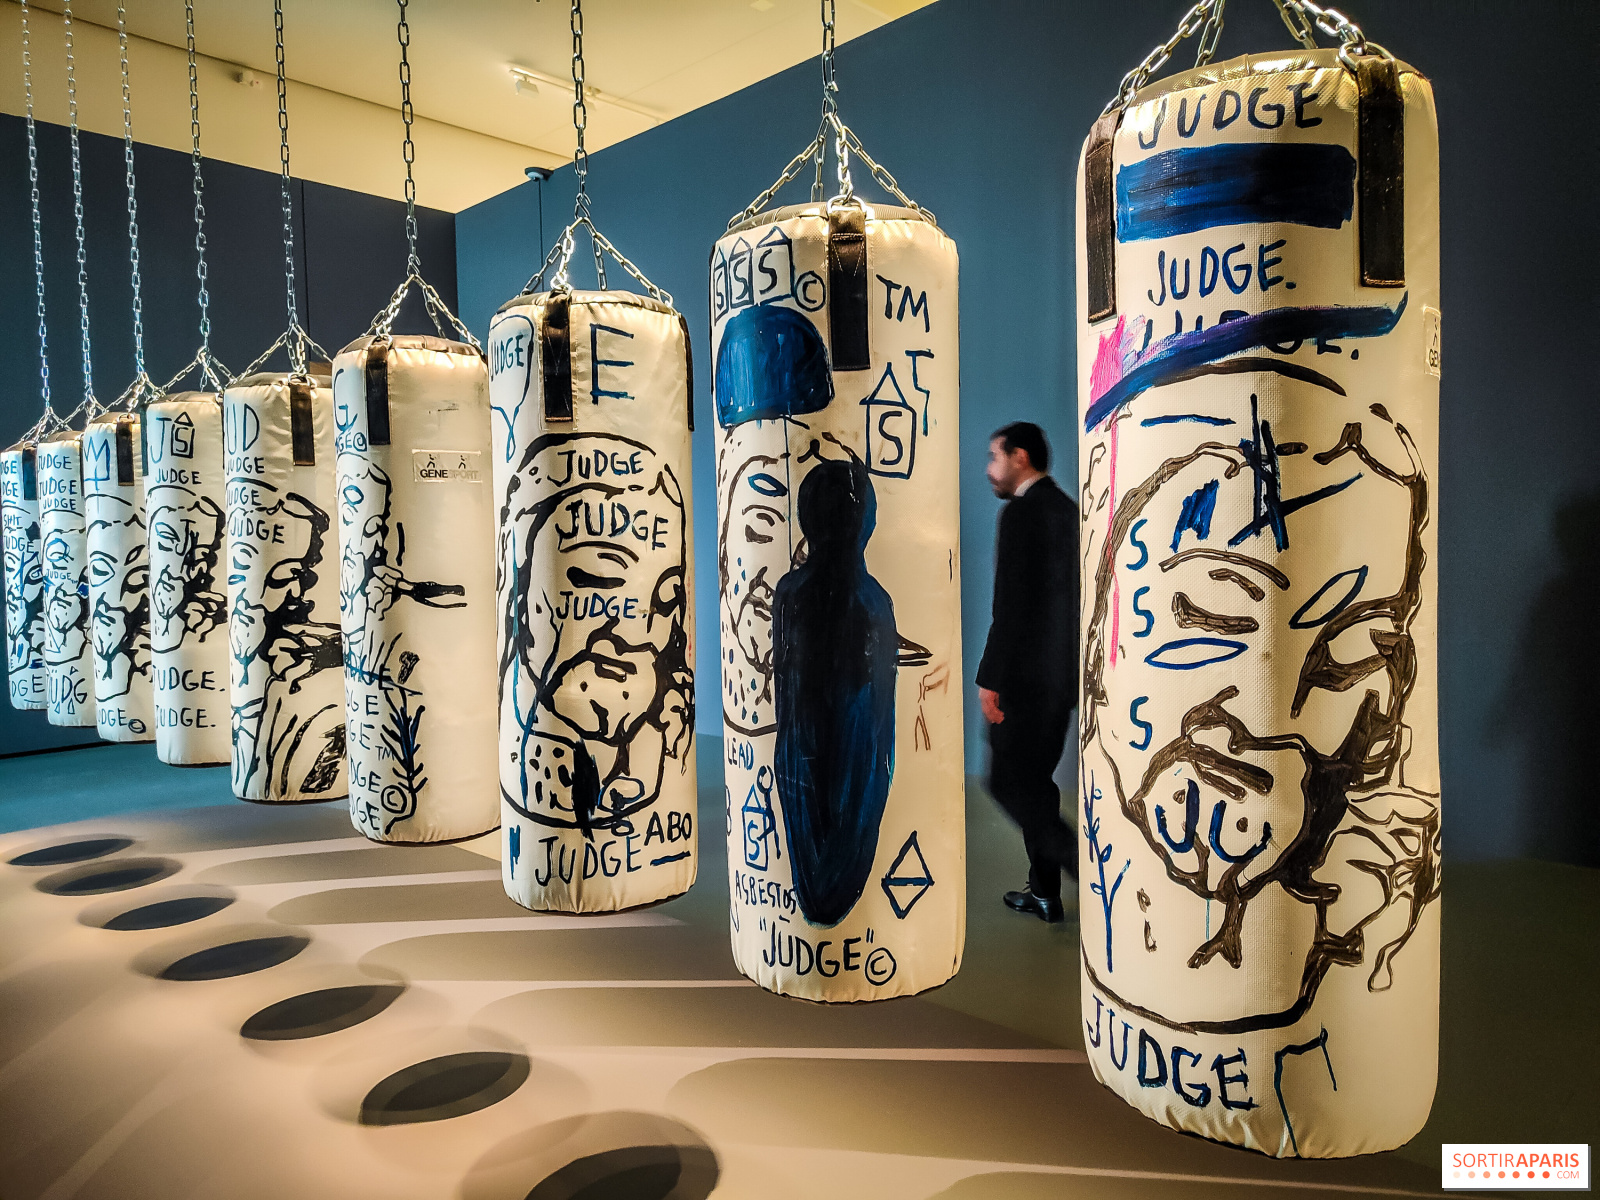 Basquiat x Warhol. Painting 4 hands » - Exhibition at Louis Vuitton  Fondation in Paris - LUXE.TV 